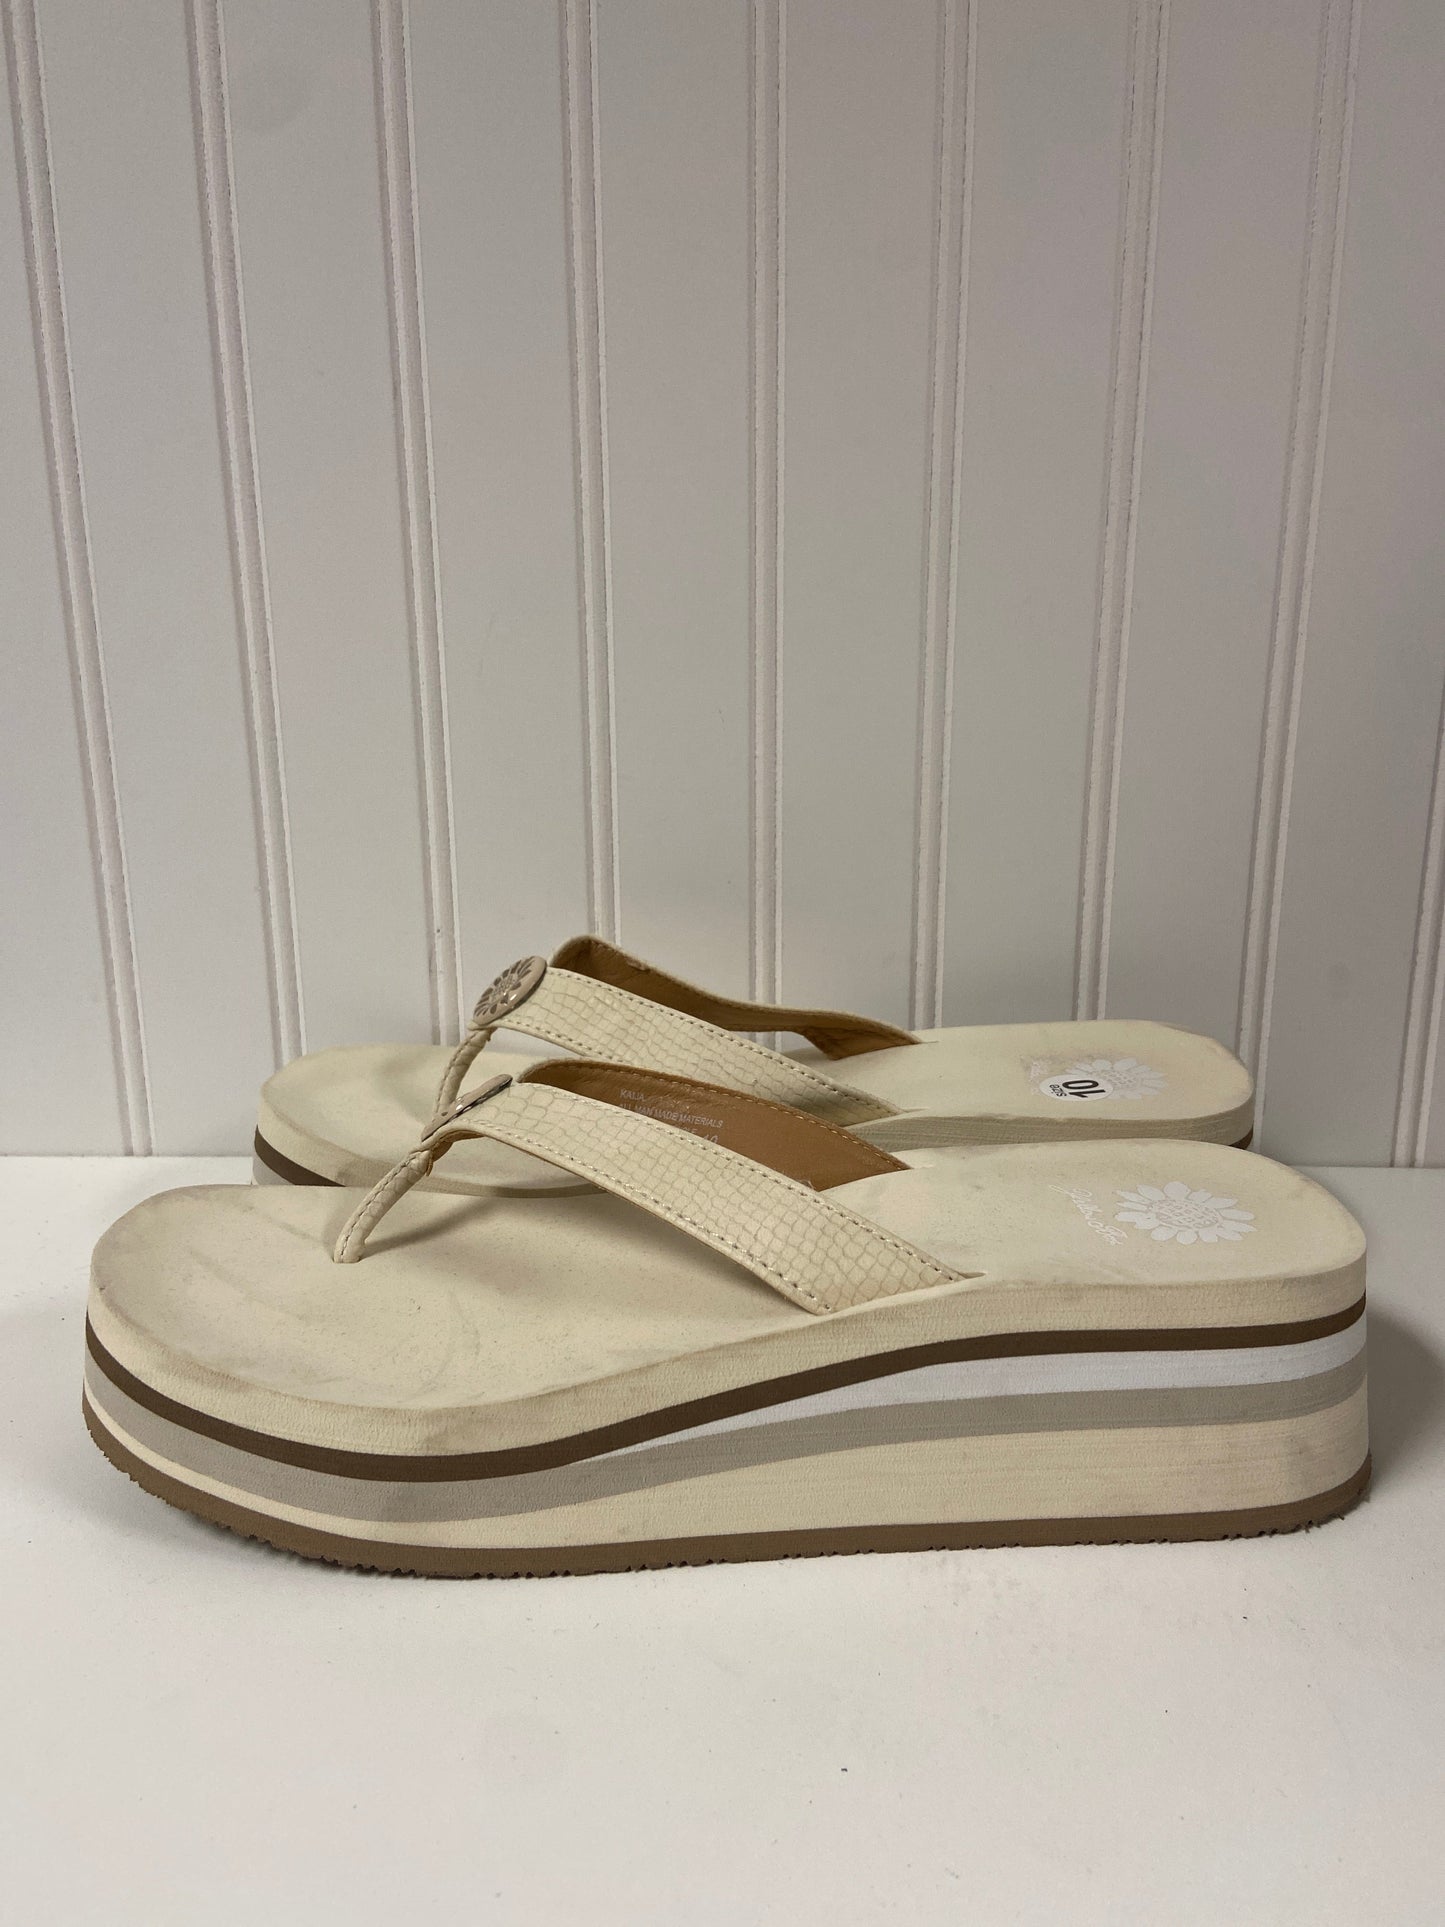 Cream Sandals Heels Stiletto Yellow Box, Size 10